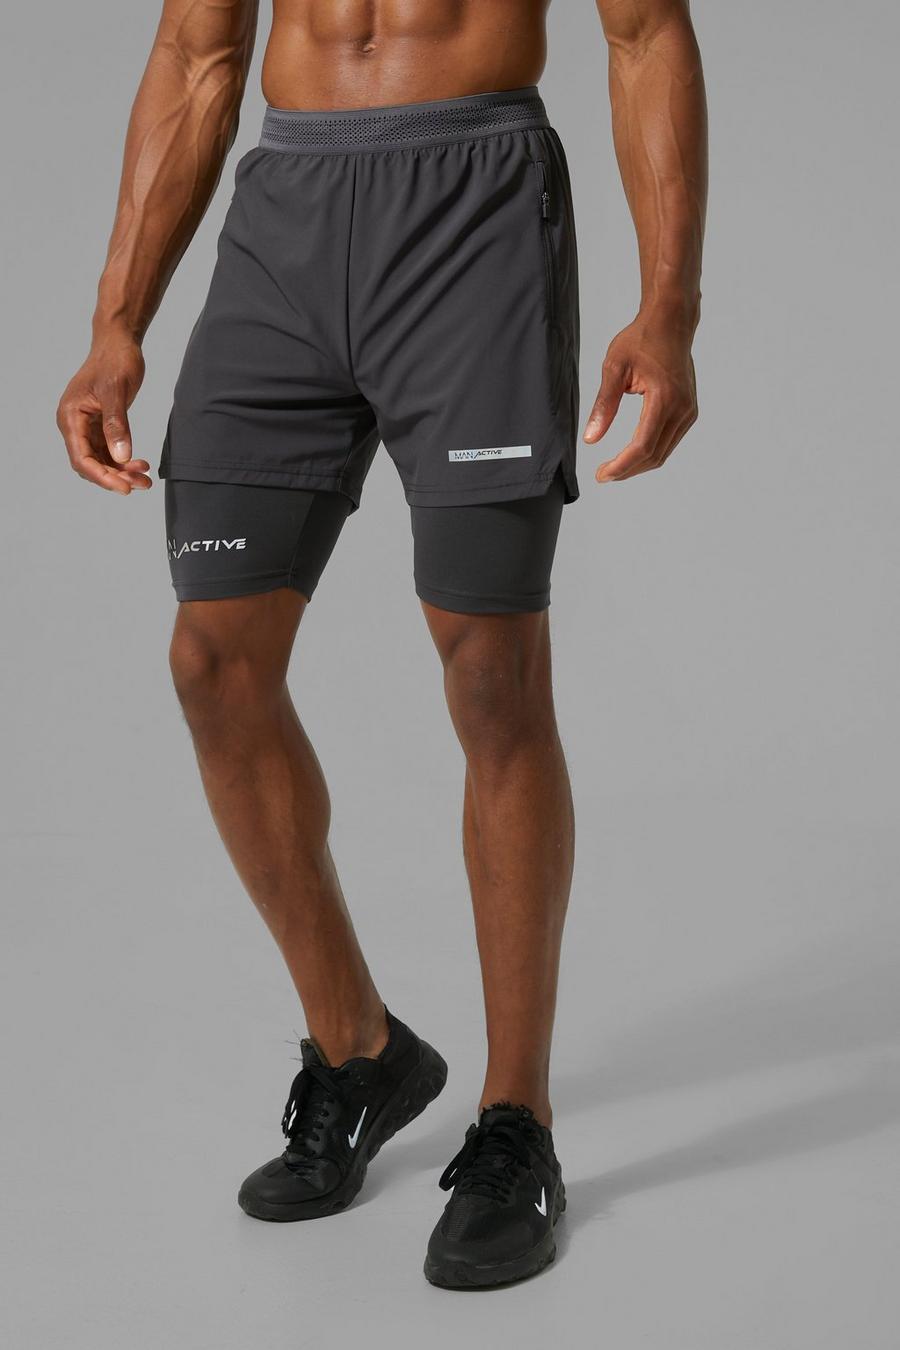 Pantaloncini 2 in 1 Man Active con stampa e spacco sul fondo, Charcoal image number 1